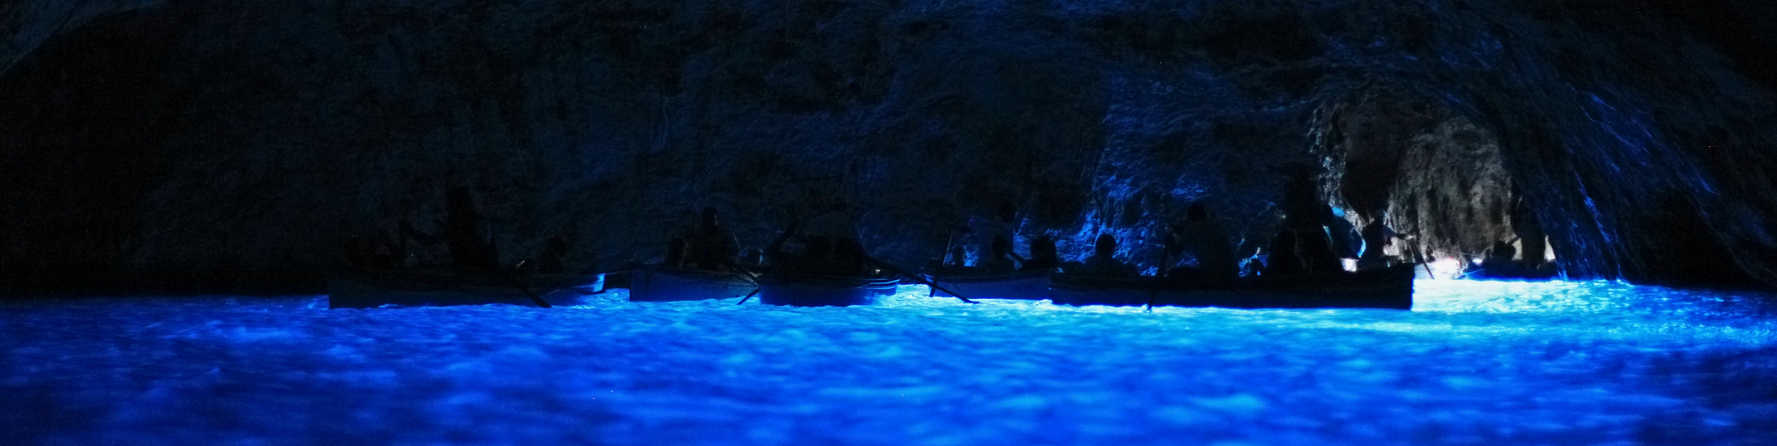 Blue Grotto, Capri: Inside Italy's incredible electric blue sea cave